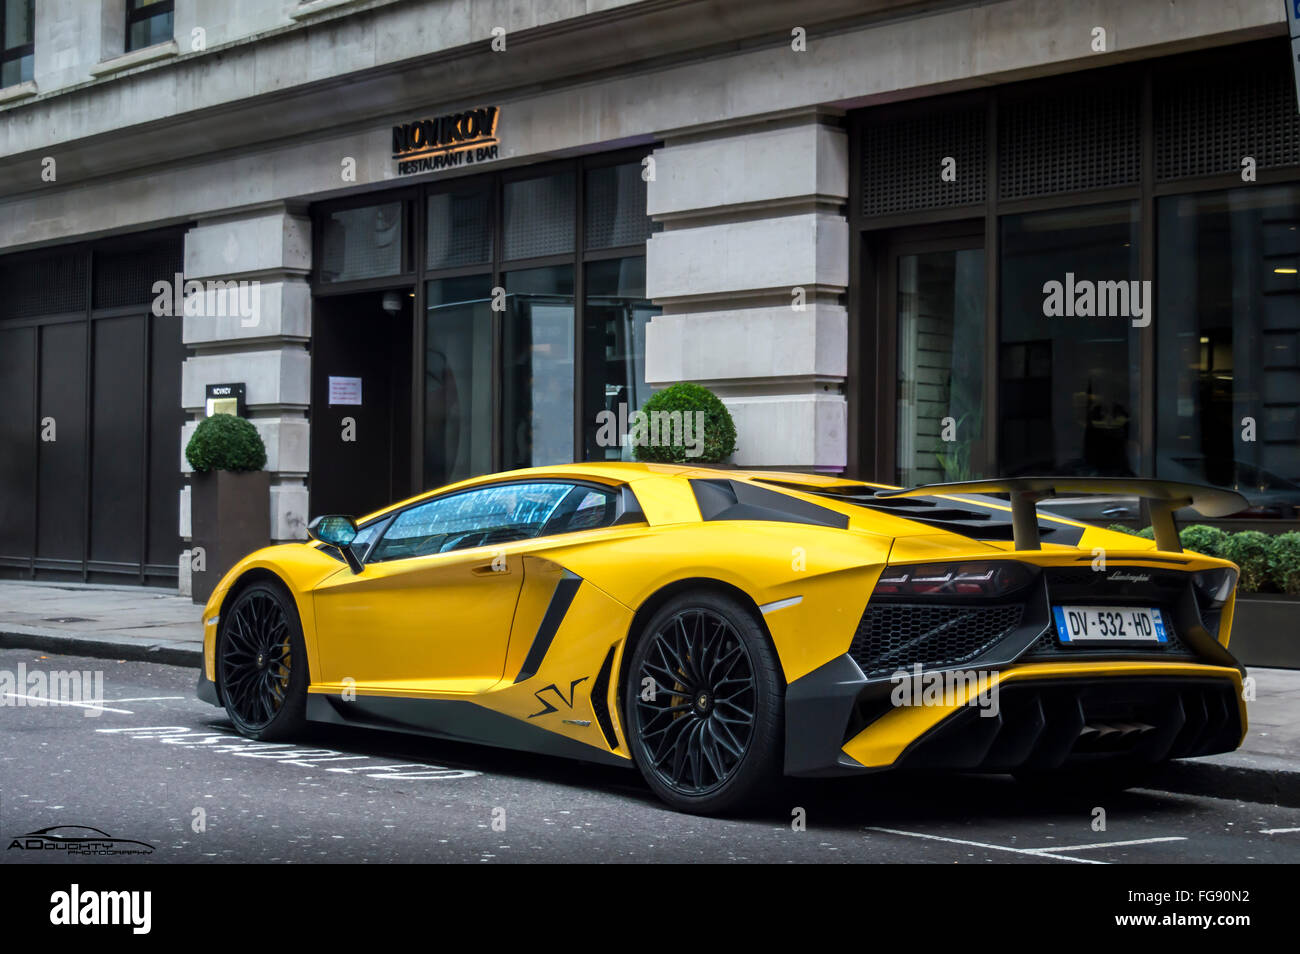 Lamborghini Aventador Sv In London Stock Photo, Royalty ...